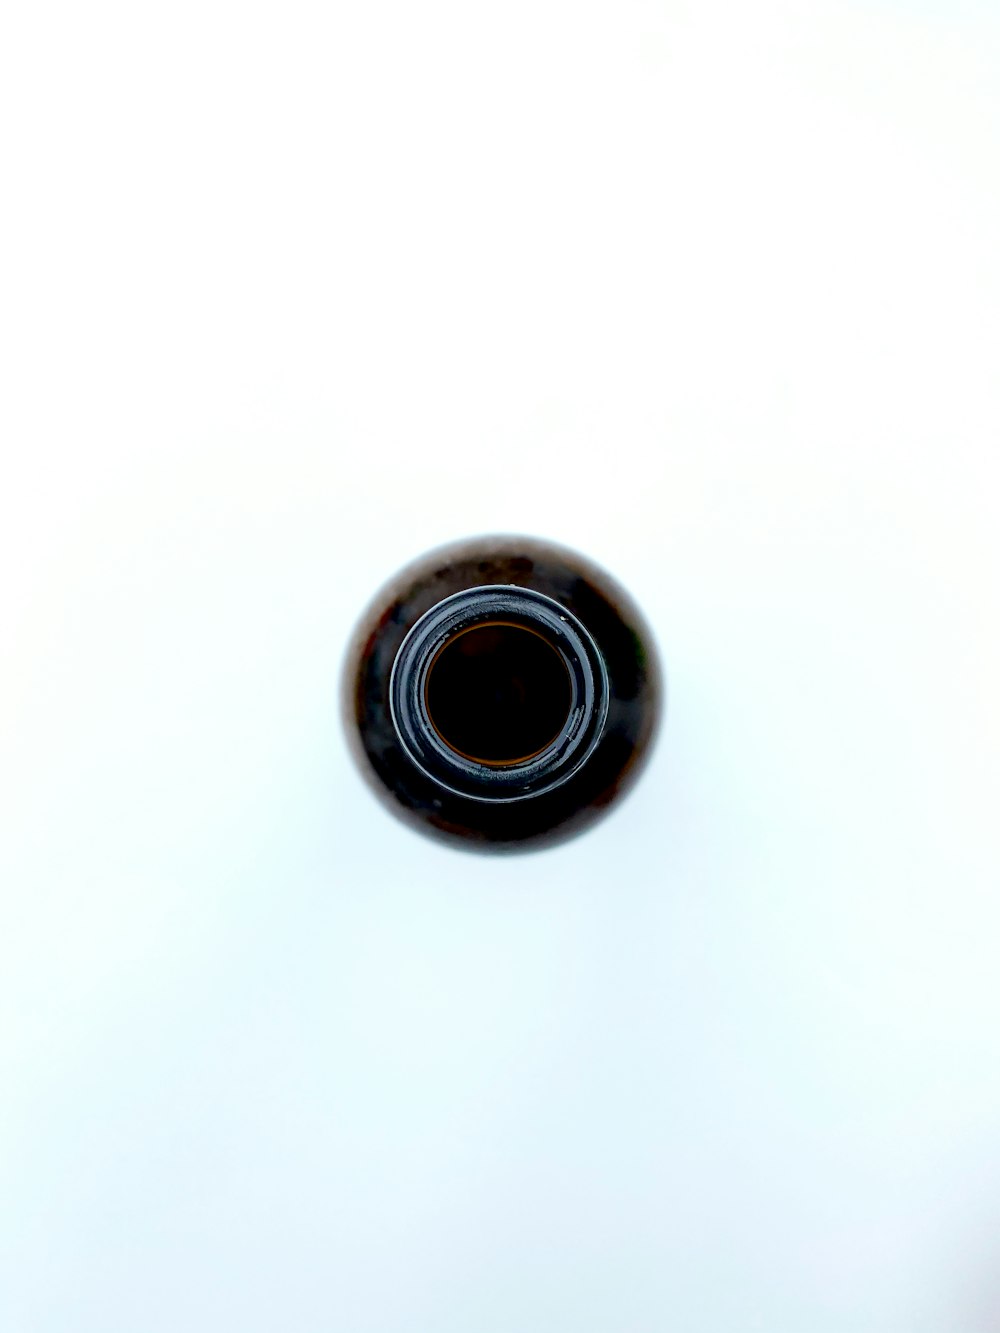 black round device on white surface